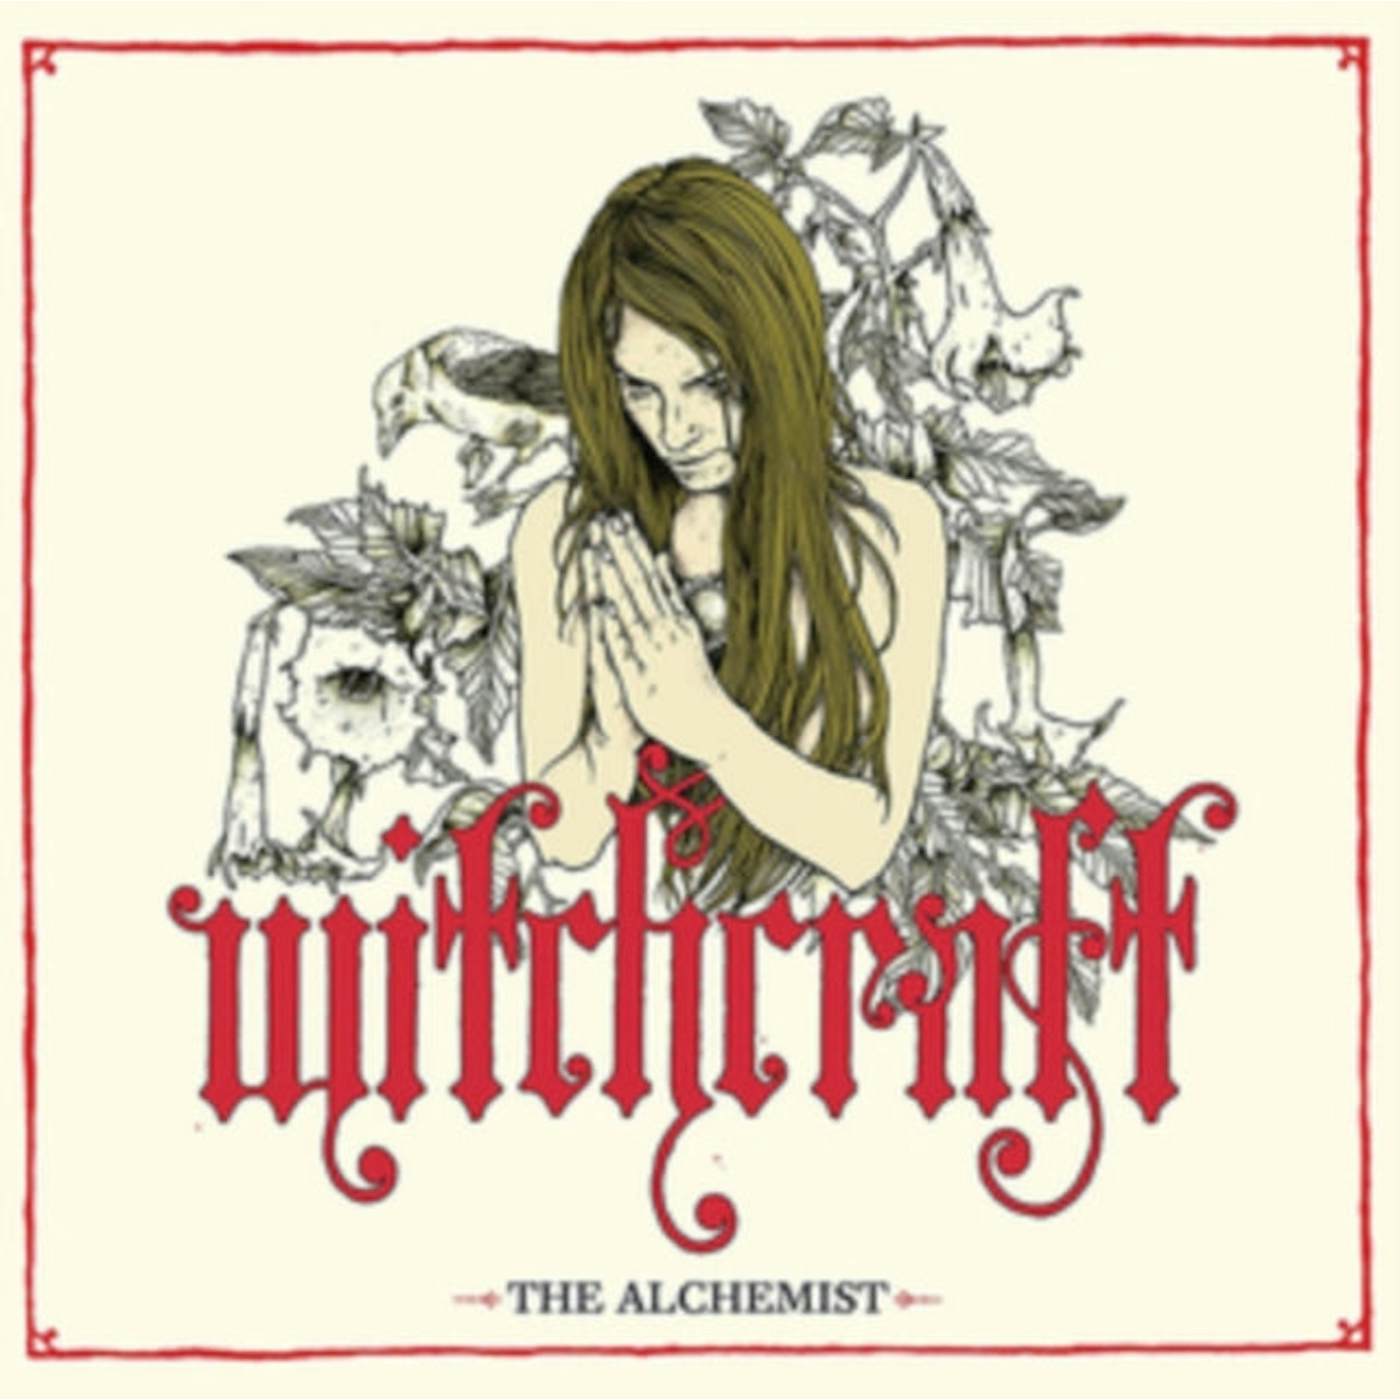 Witchcraft CD - The Alchemist (Re-Issue)